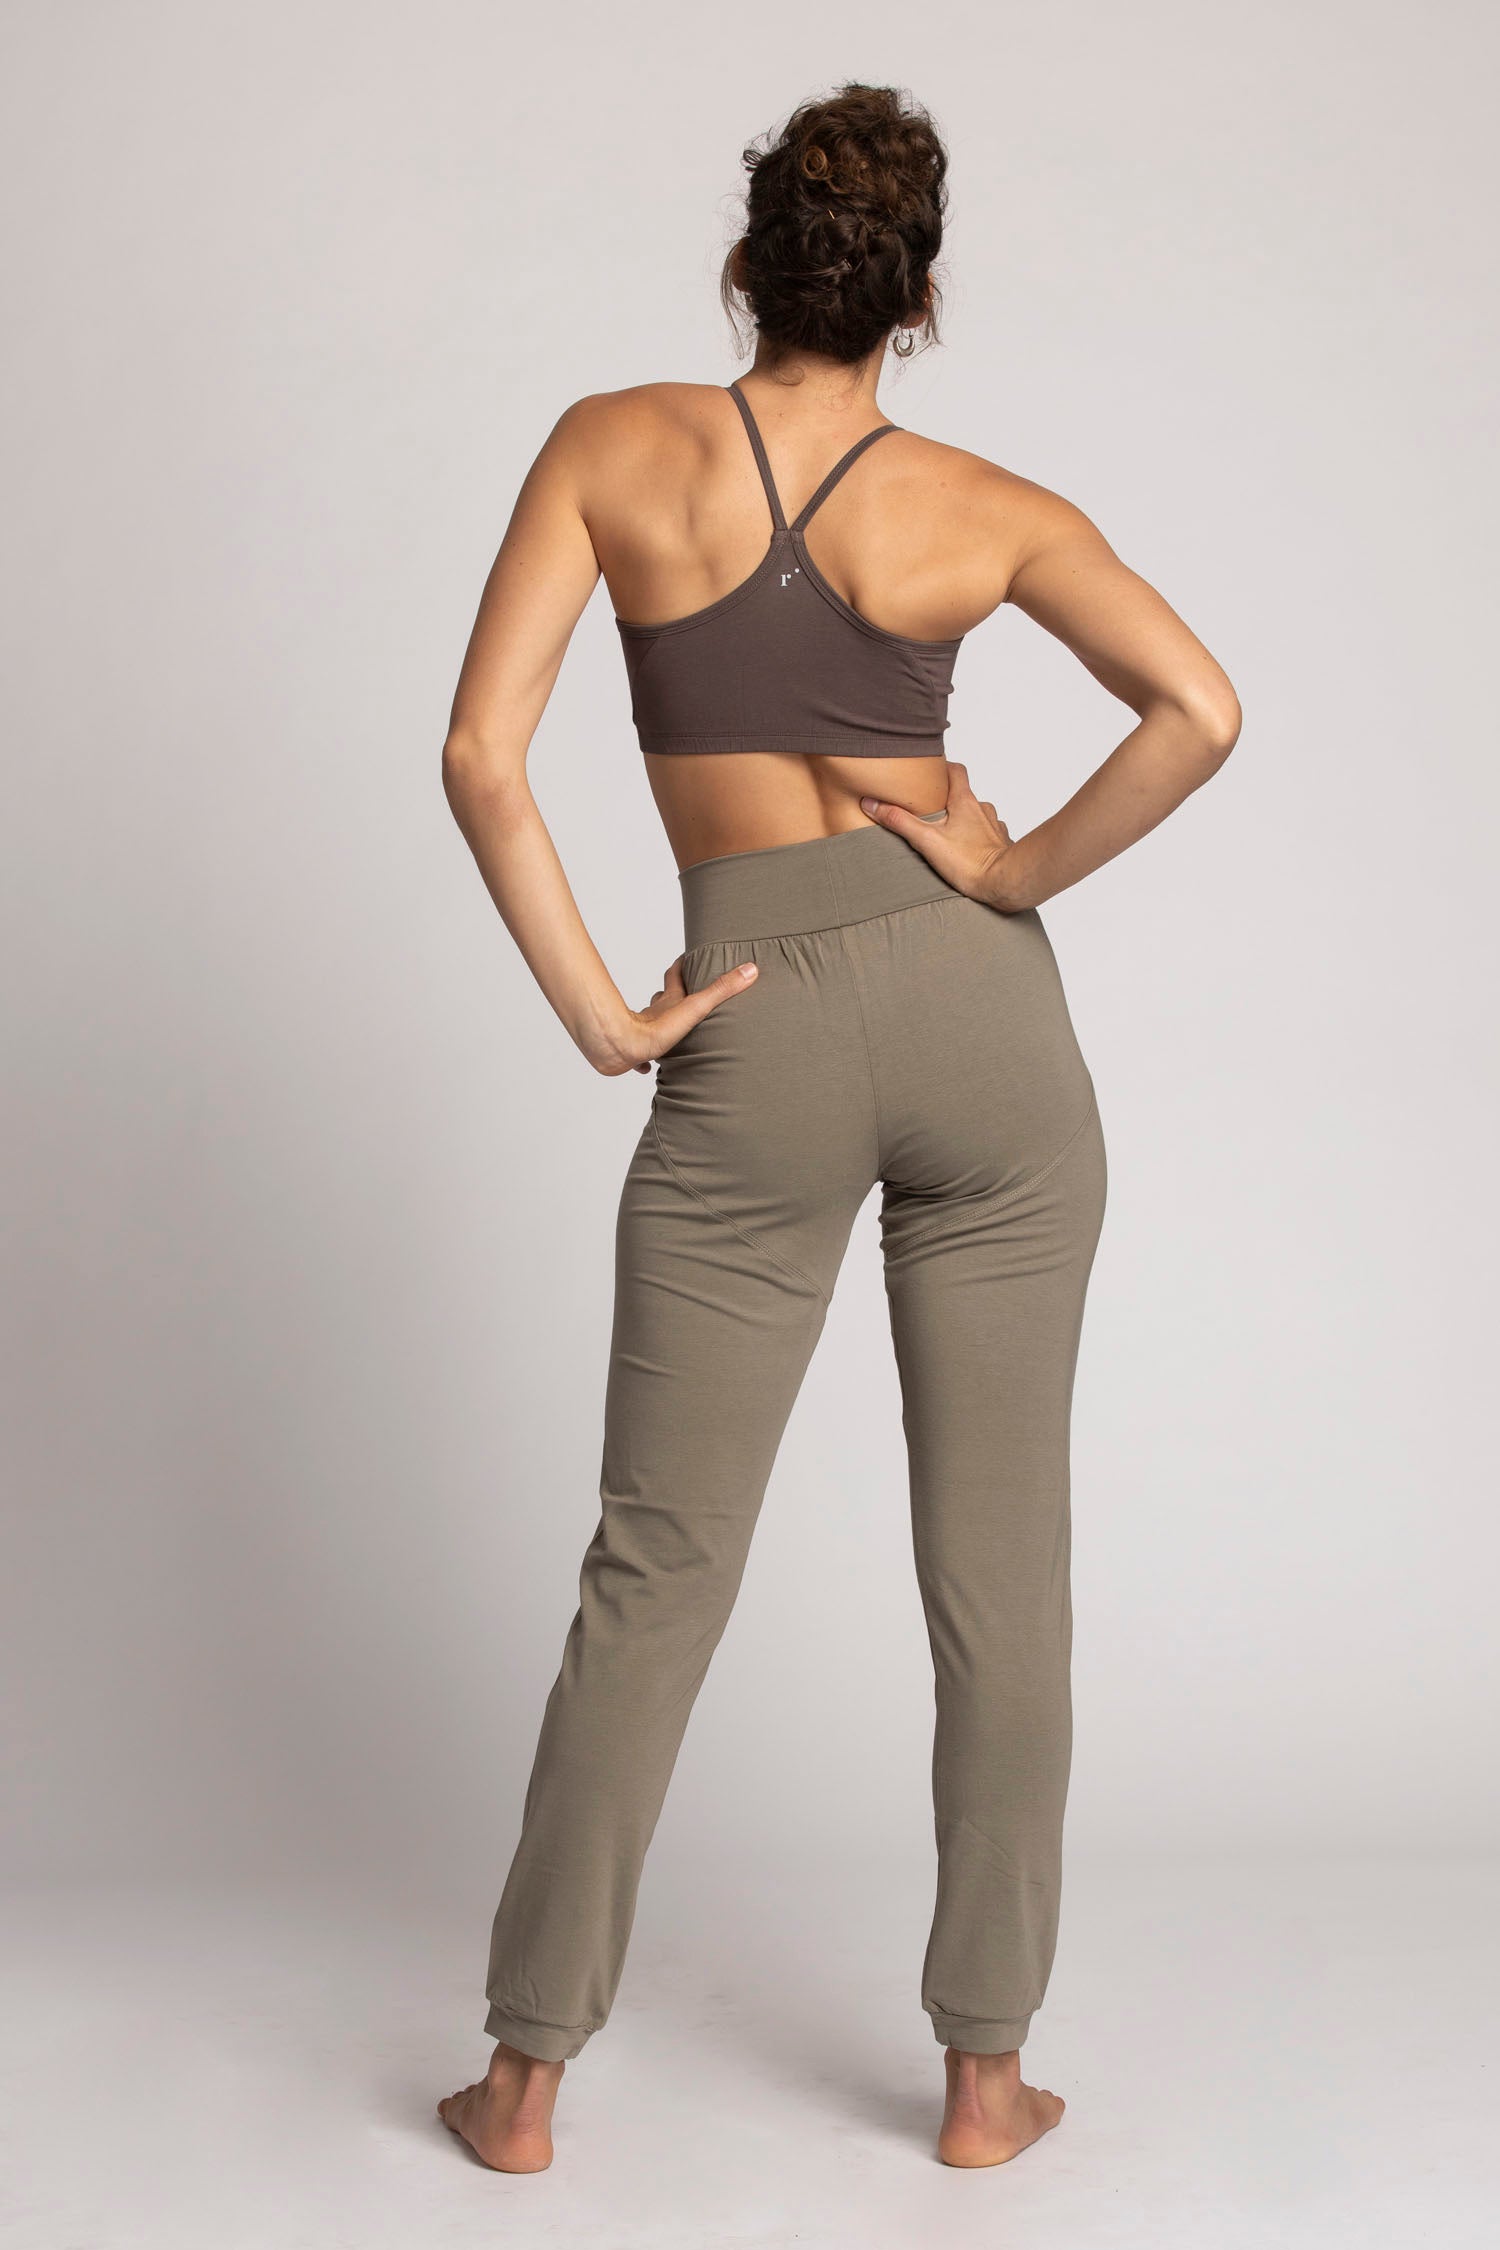  Pantalones De Yoga Para Mujer - $50 To $100 / Women's Yoga  Pants / Women's Yoga : Clothing, Shoes & Jewelry